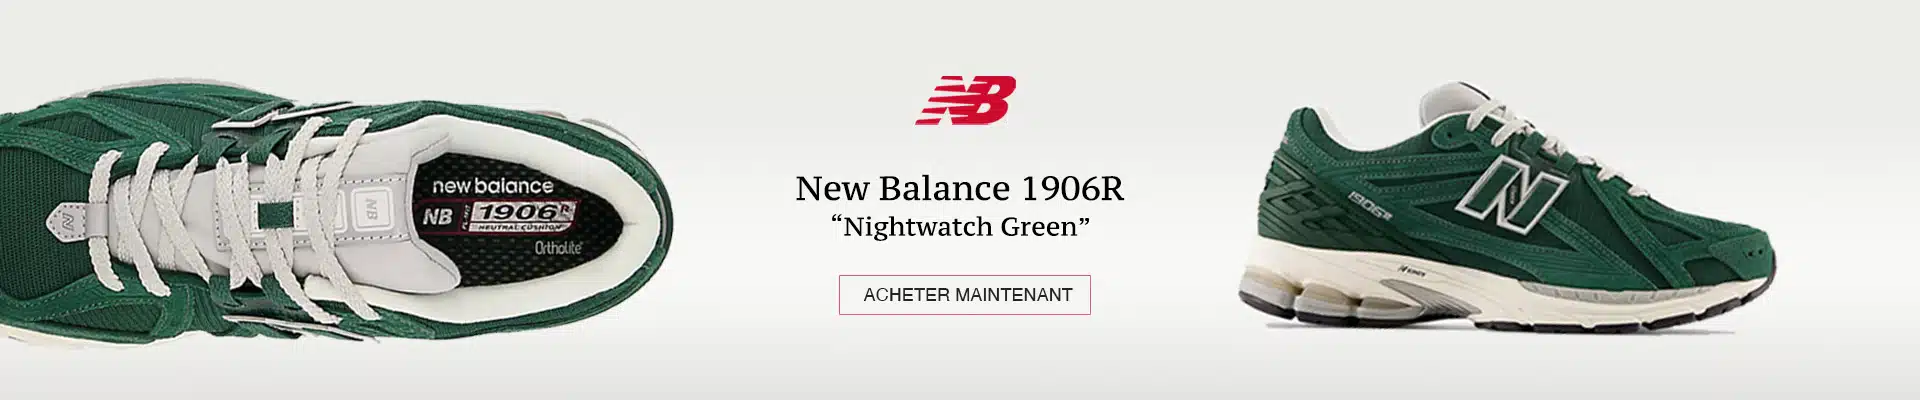 New Balance 1906R